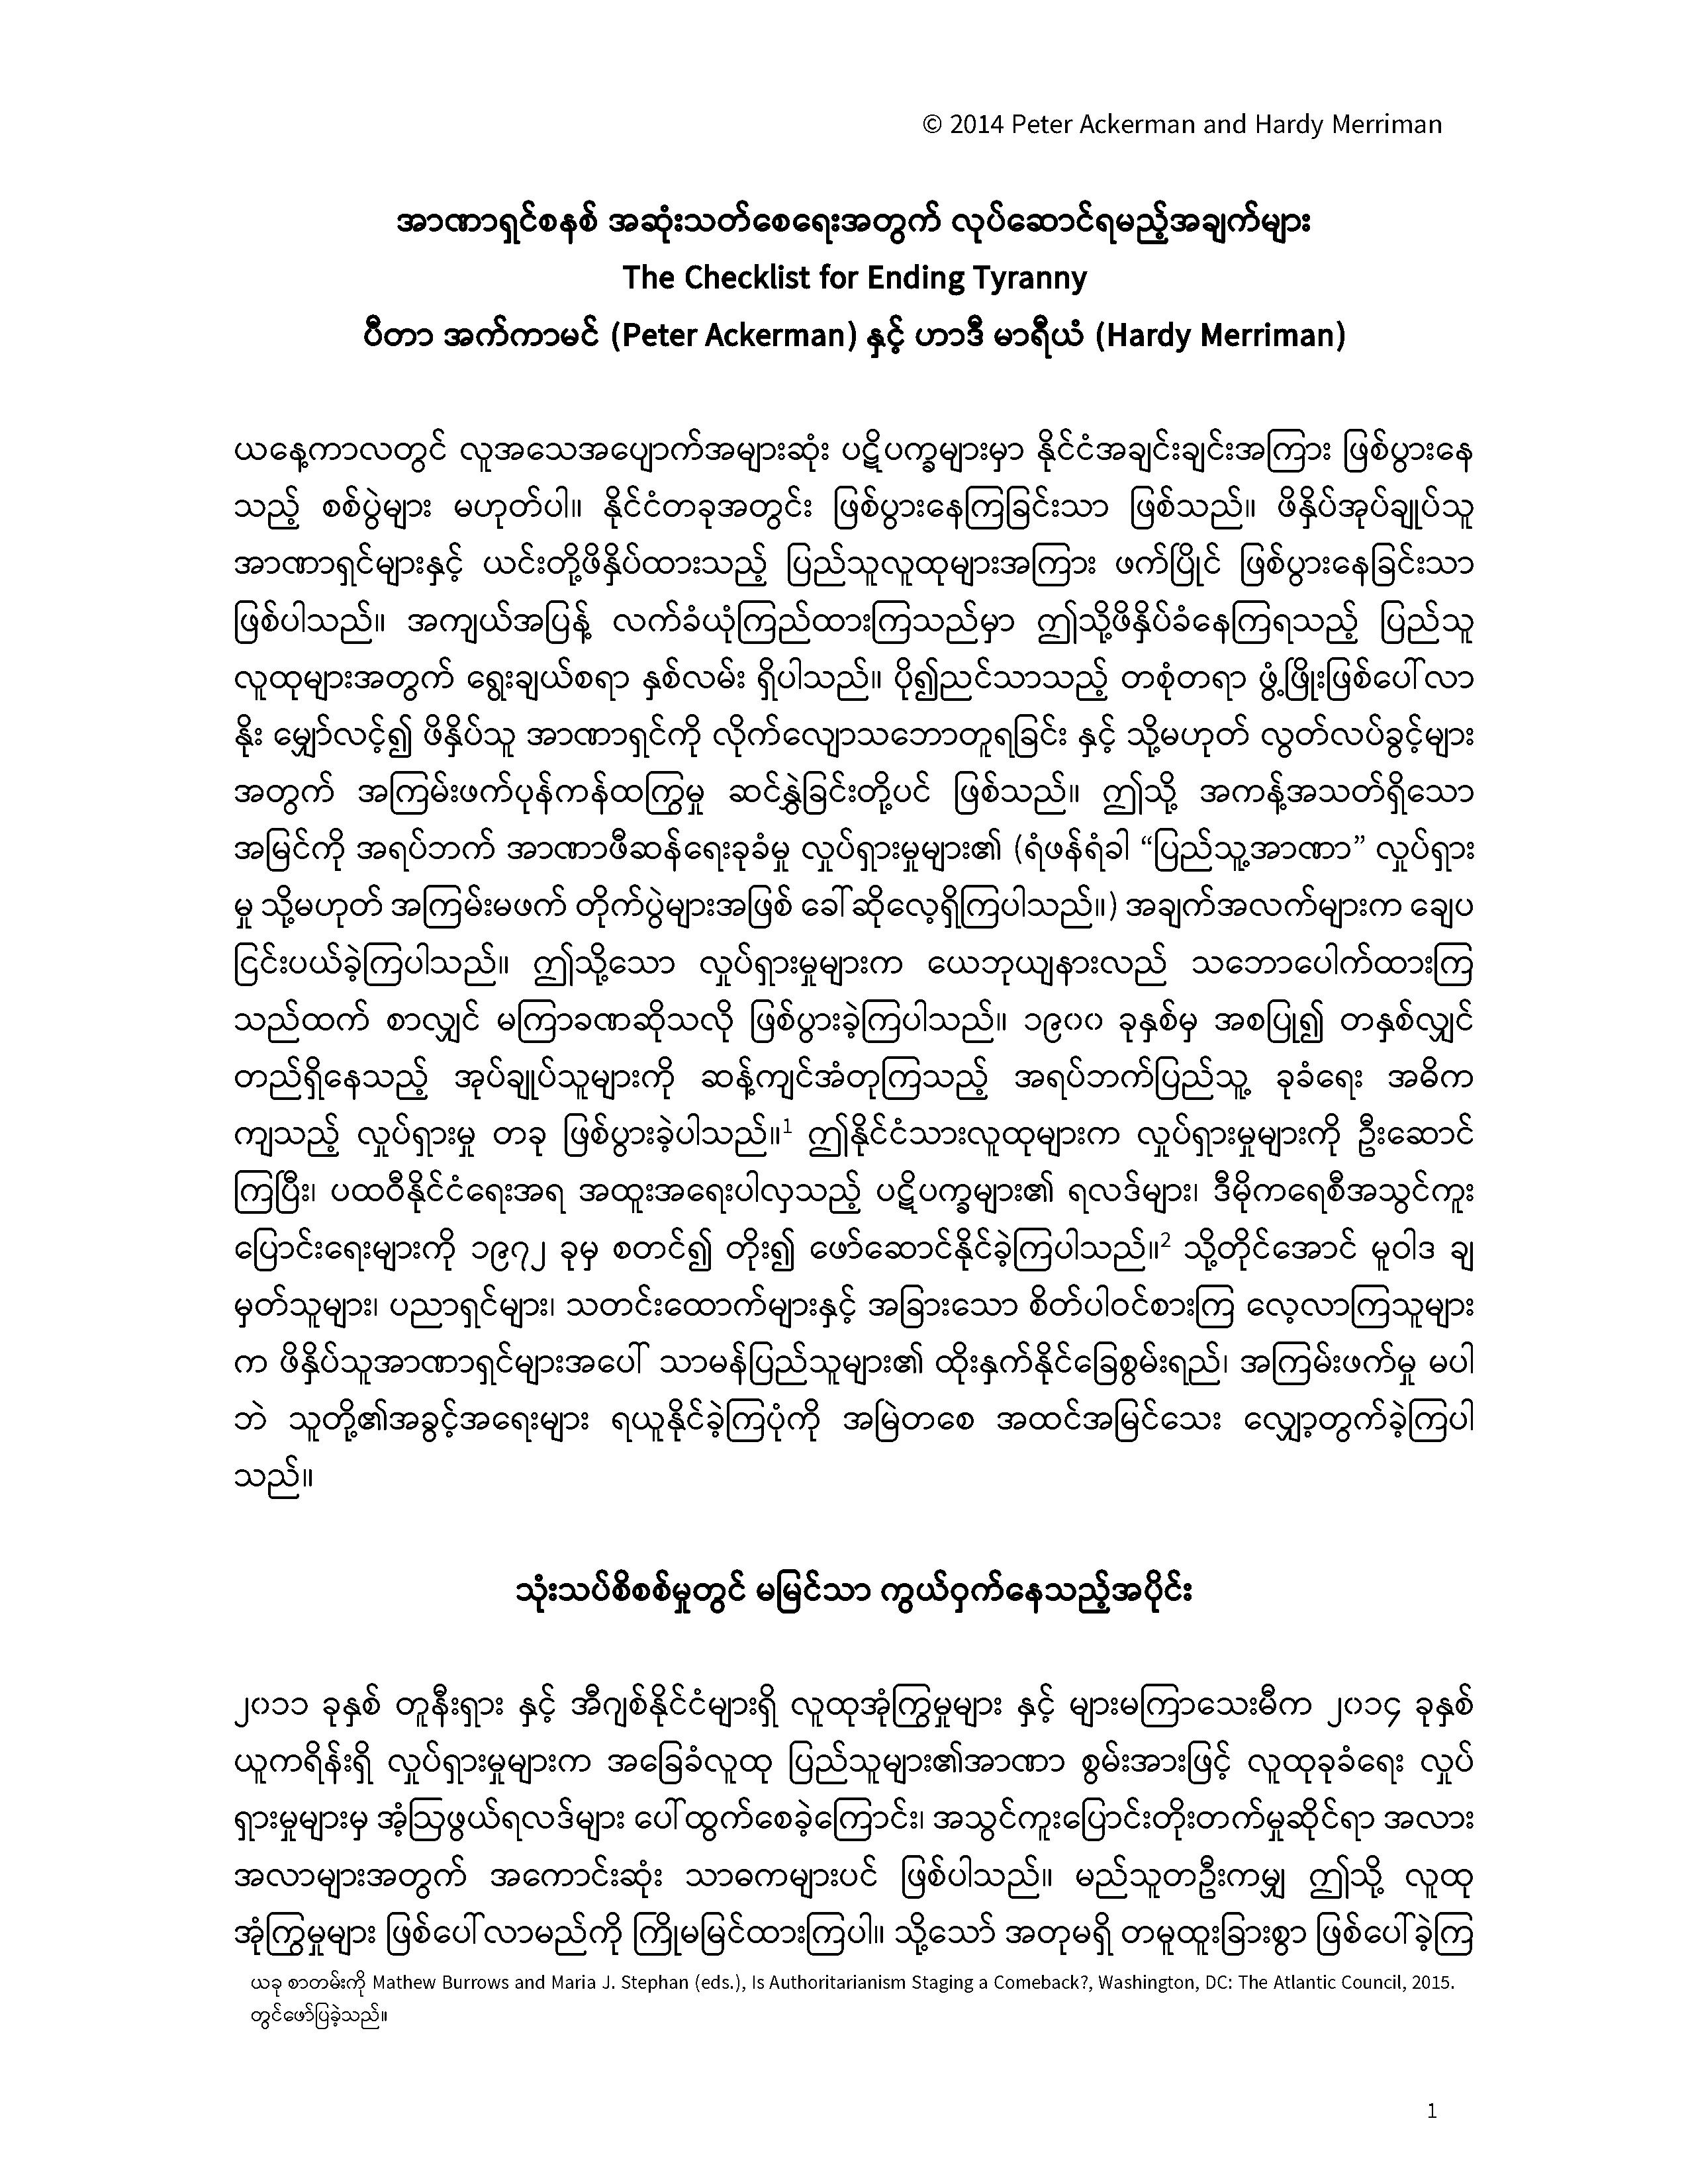 The Checklist for Ending Tyranny (Burmese)